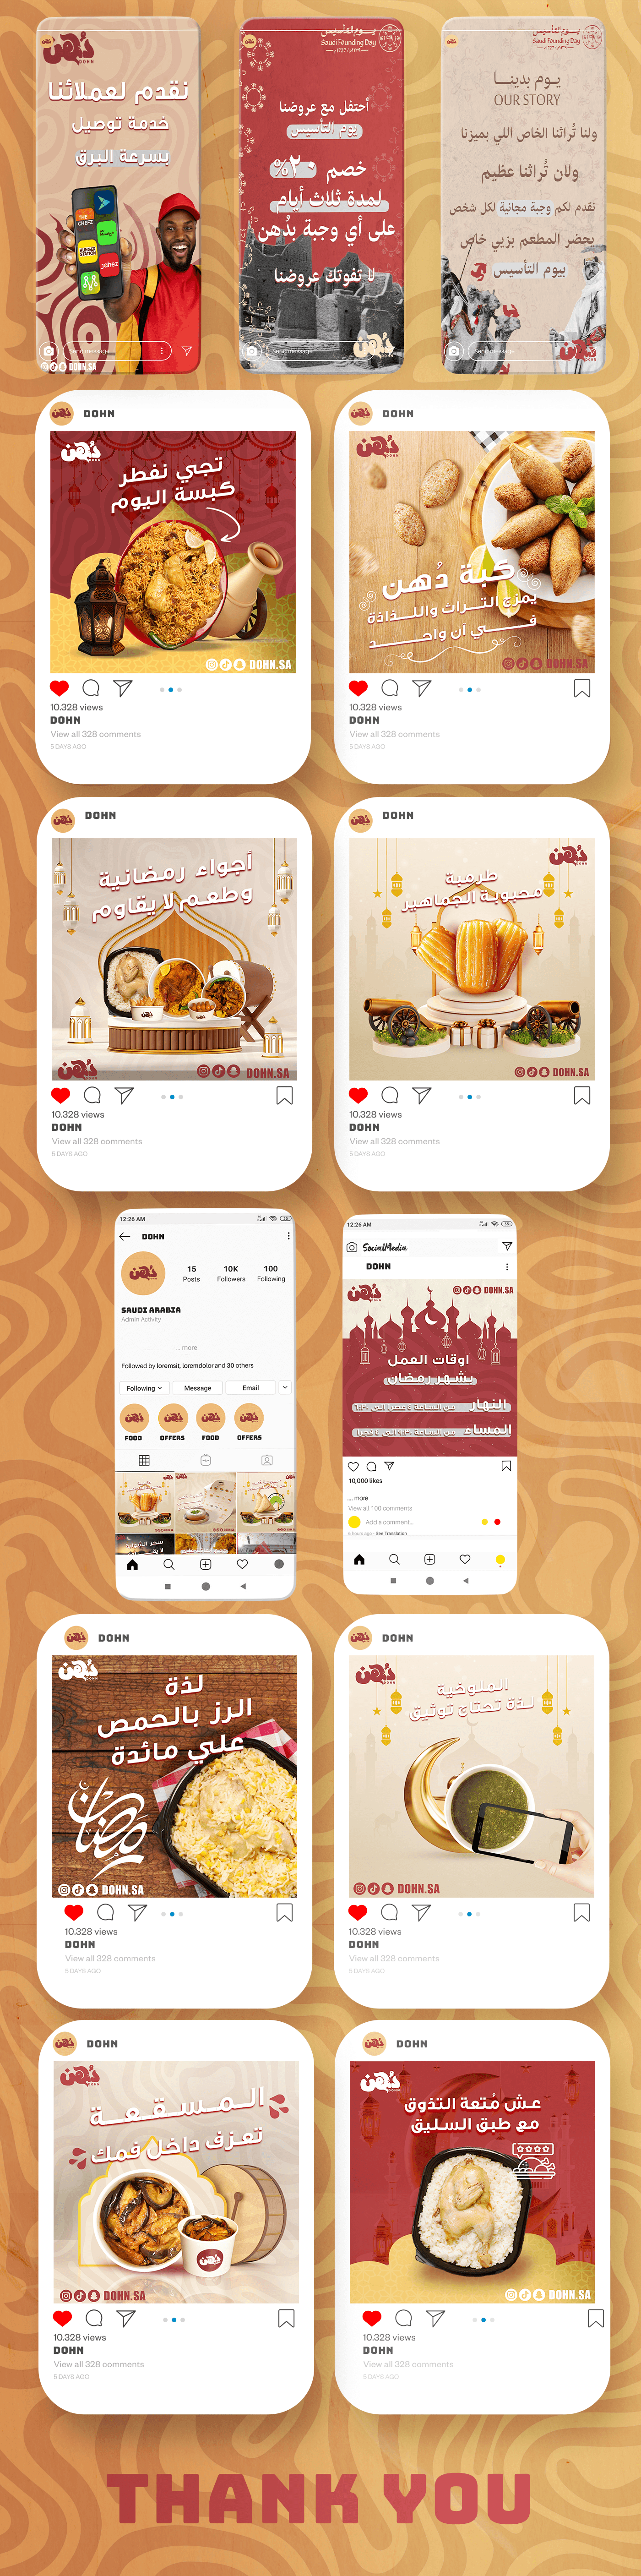 Social media post ramadan Food  Advertising  restaurant Socialmedia ads instagram ramadan design Saudi Arabia